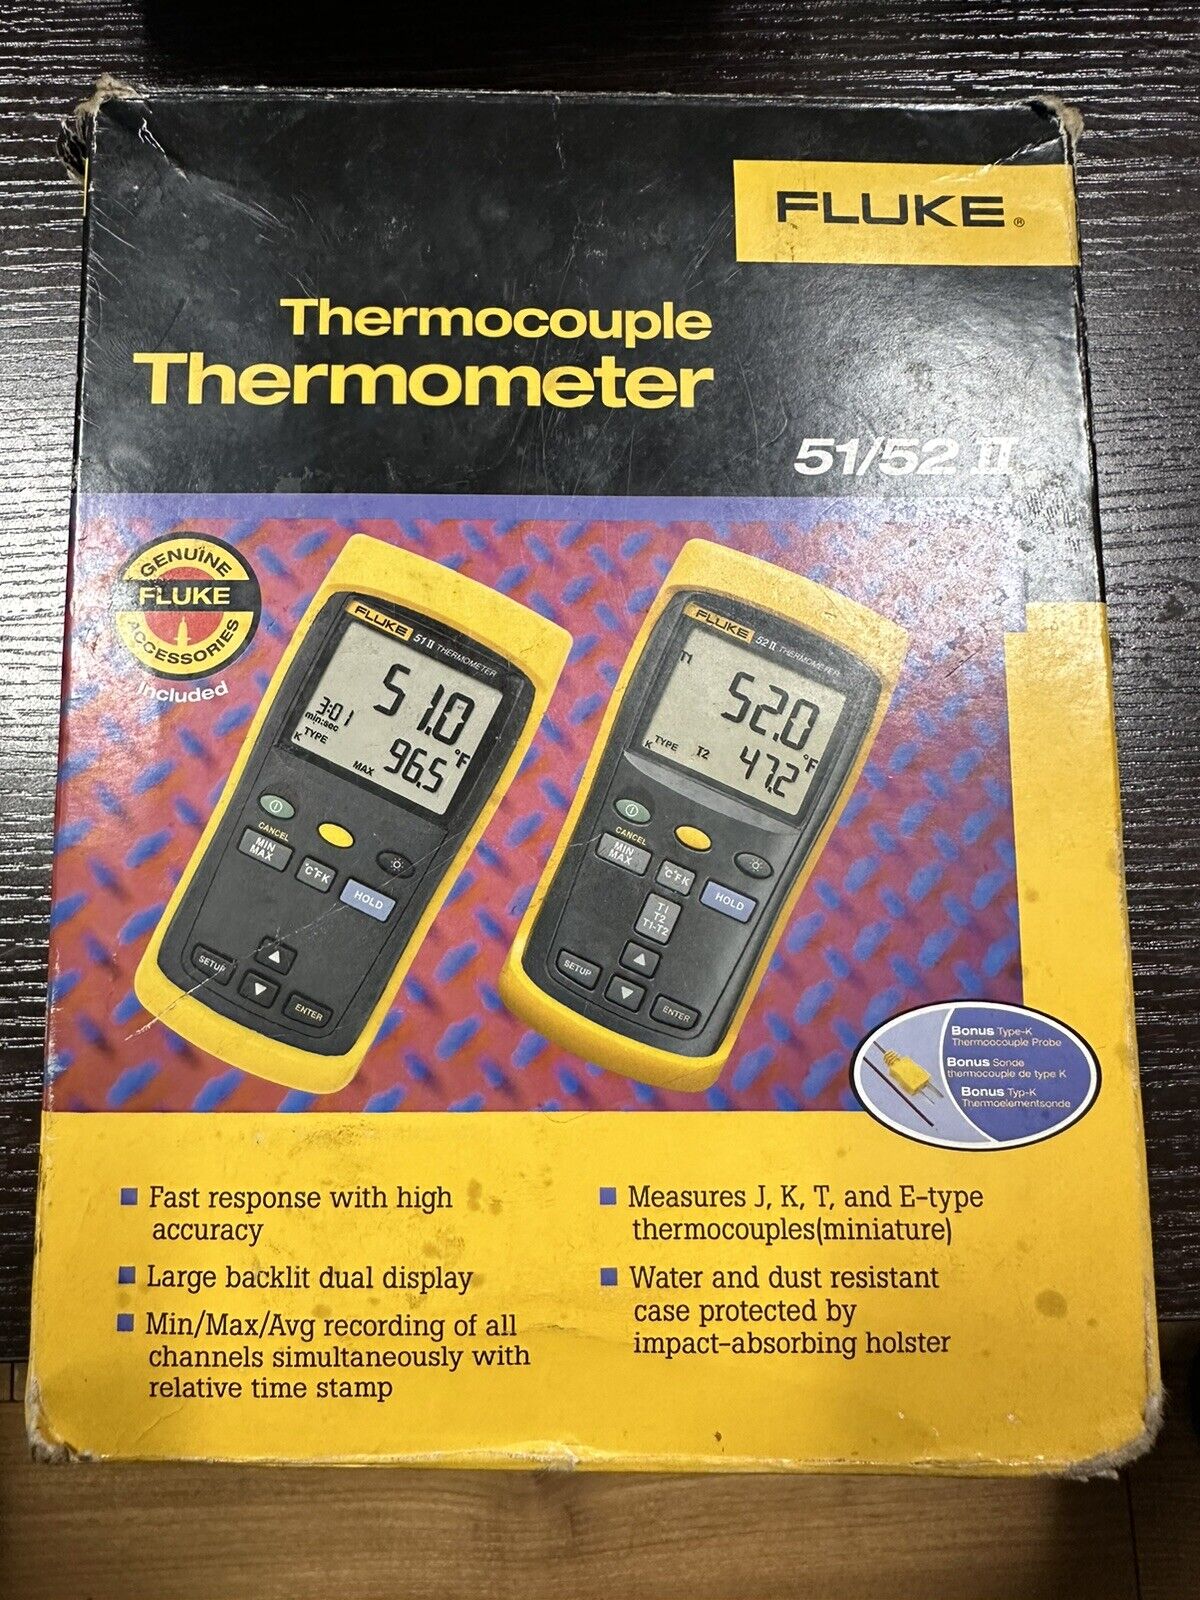 Fluke 51-2 Thermometer Series II